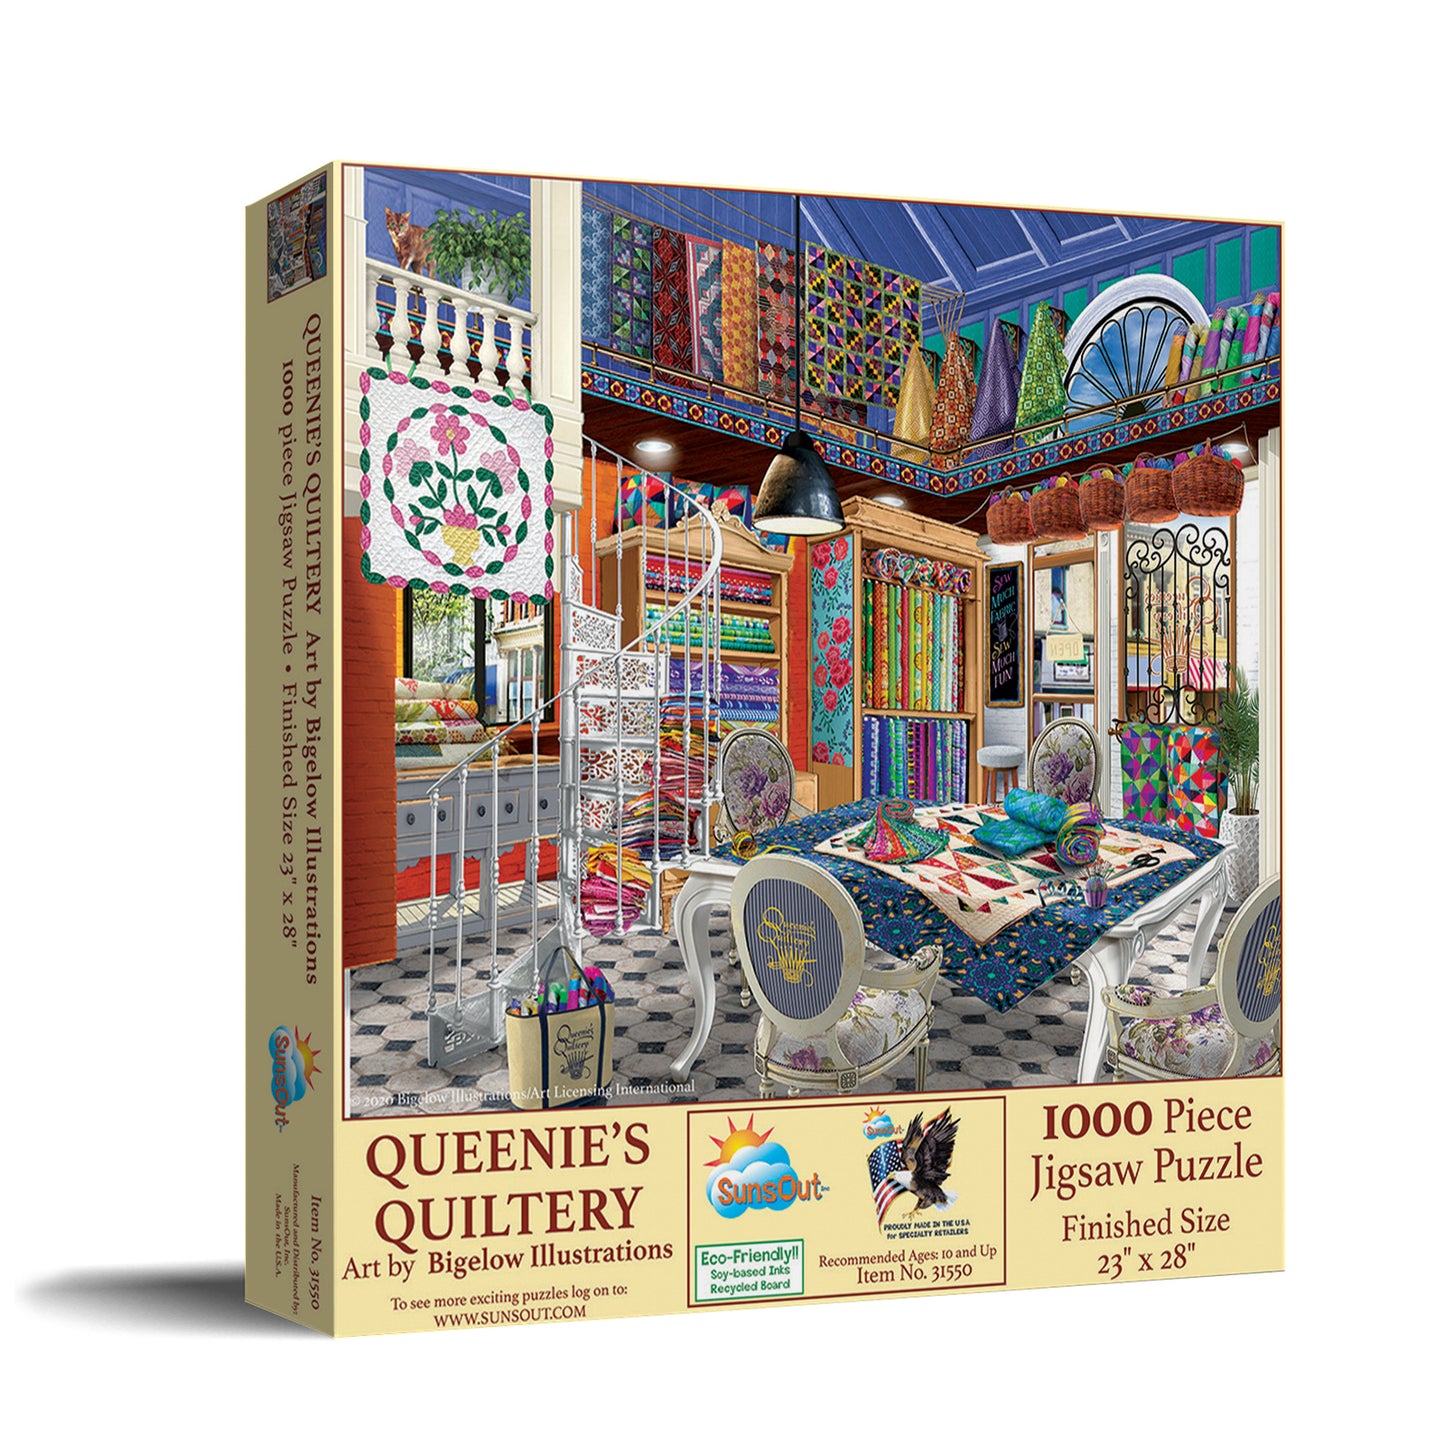 Queenie's Quiltery - 1000 Piece Jigsaw Puzzle